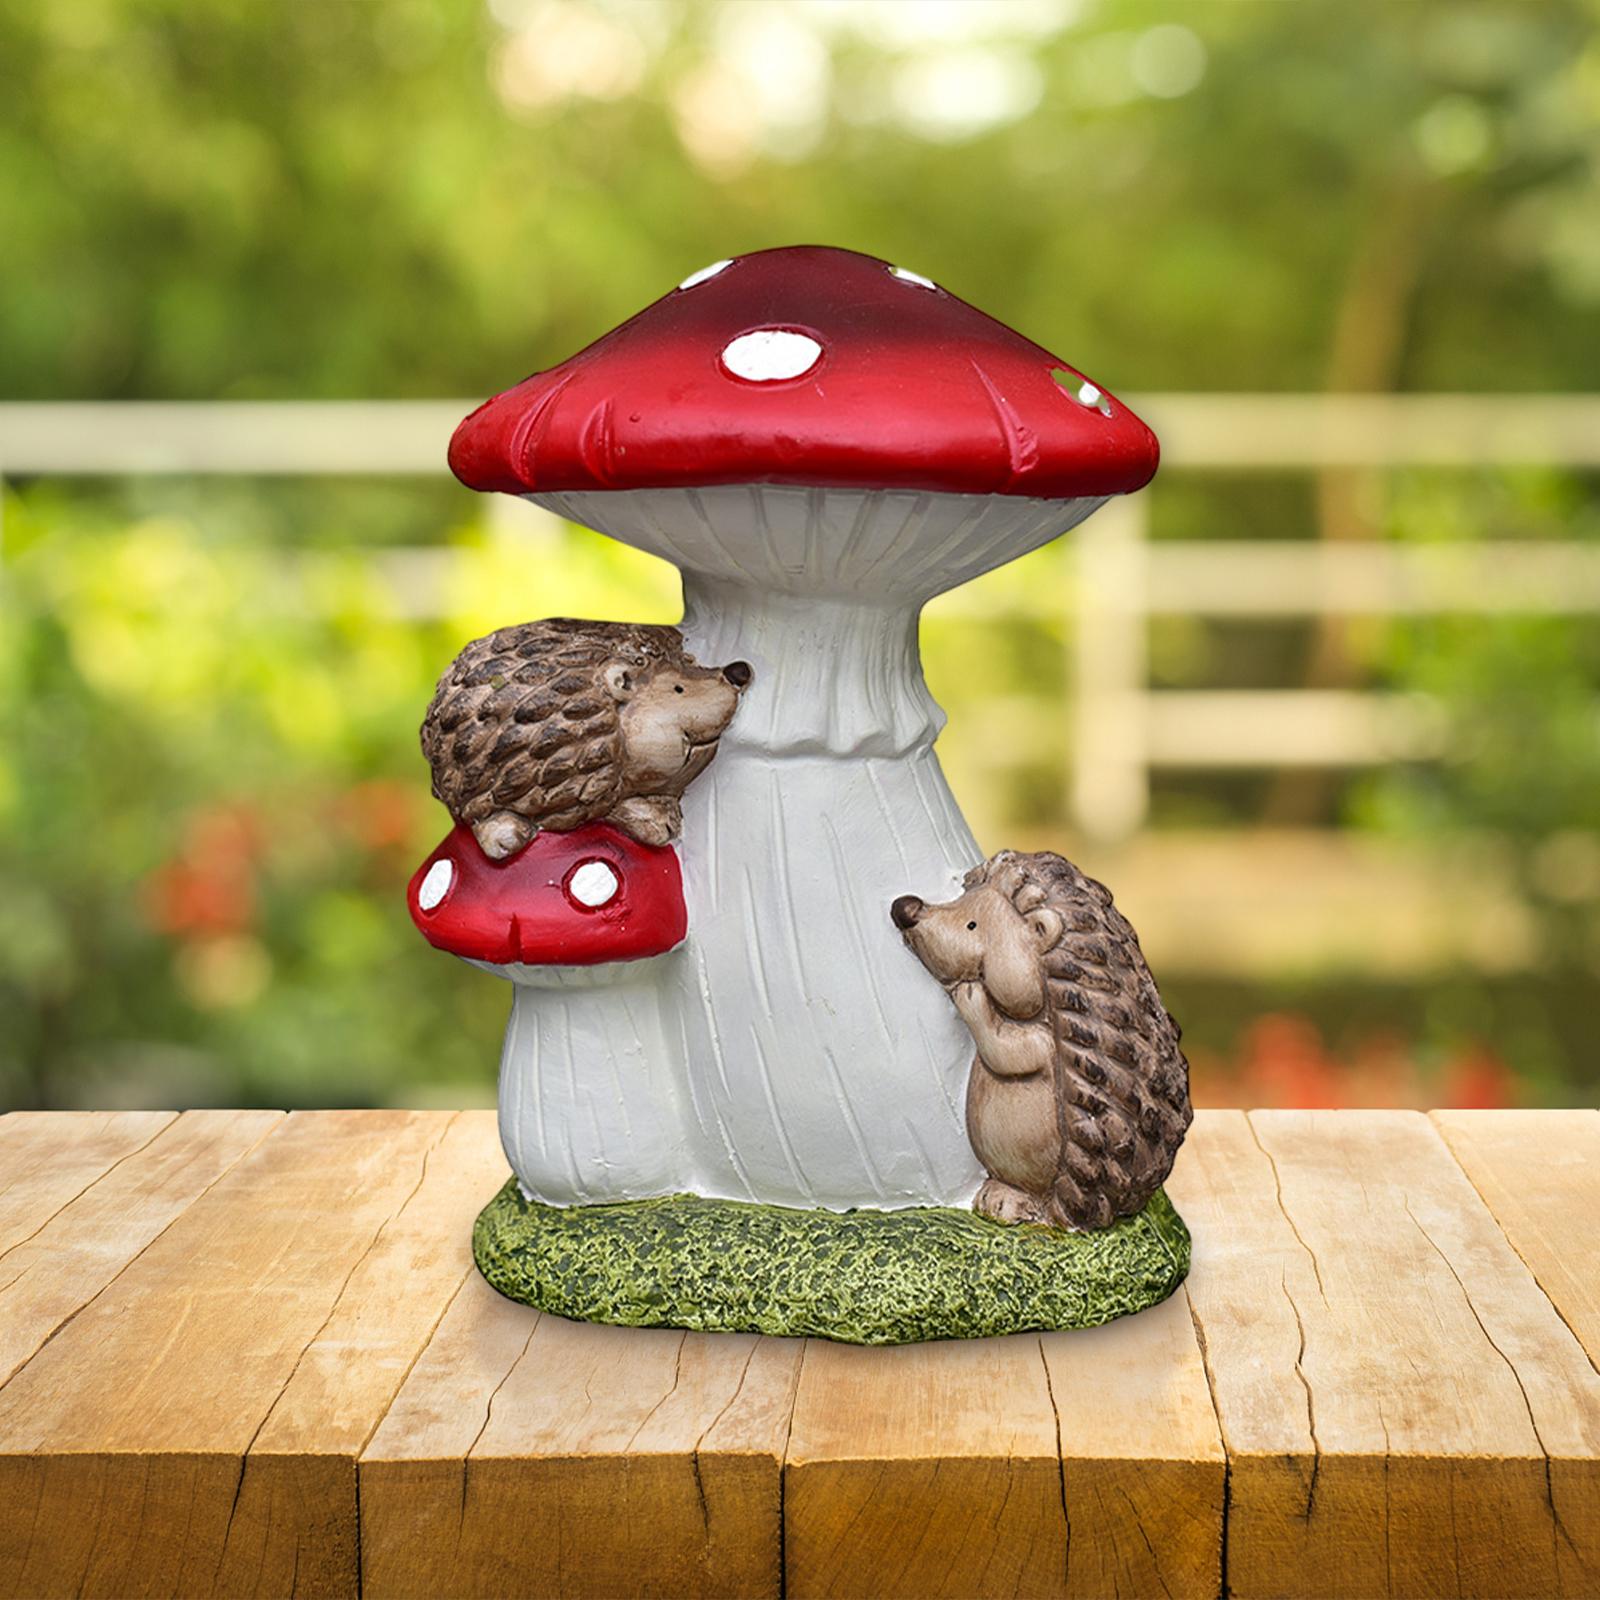 Garden Mushroom Statue Cute Desktop Ornament for Courtyard Living Room Decor